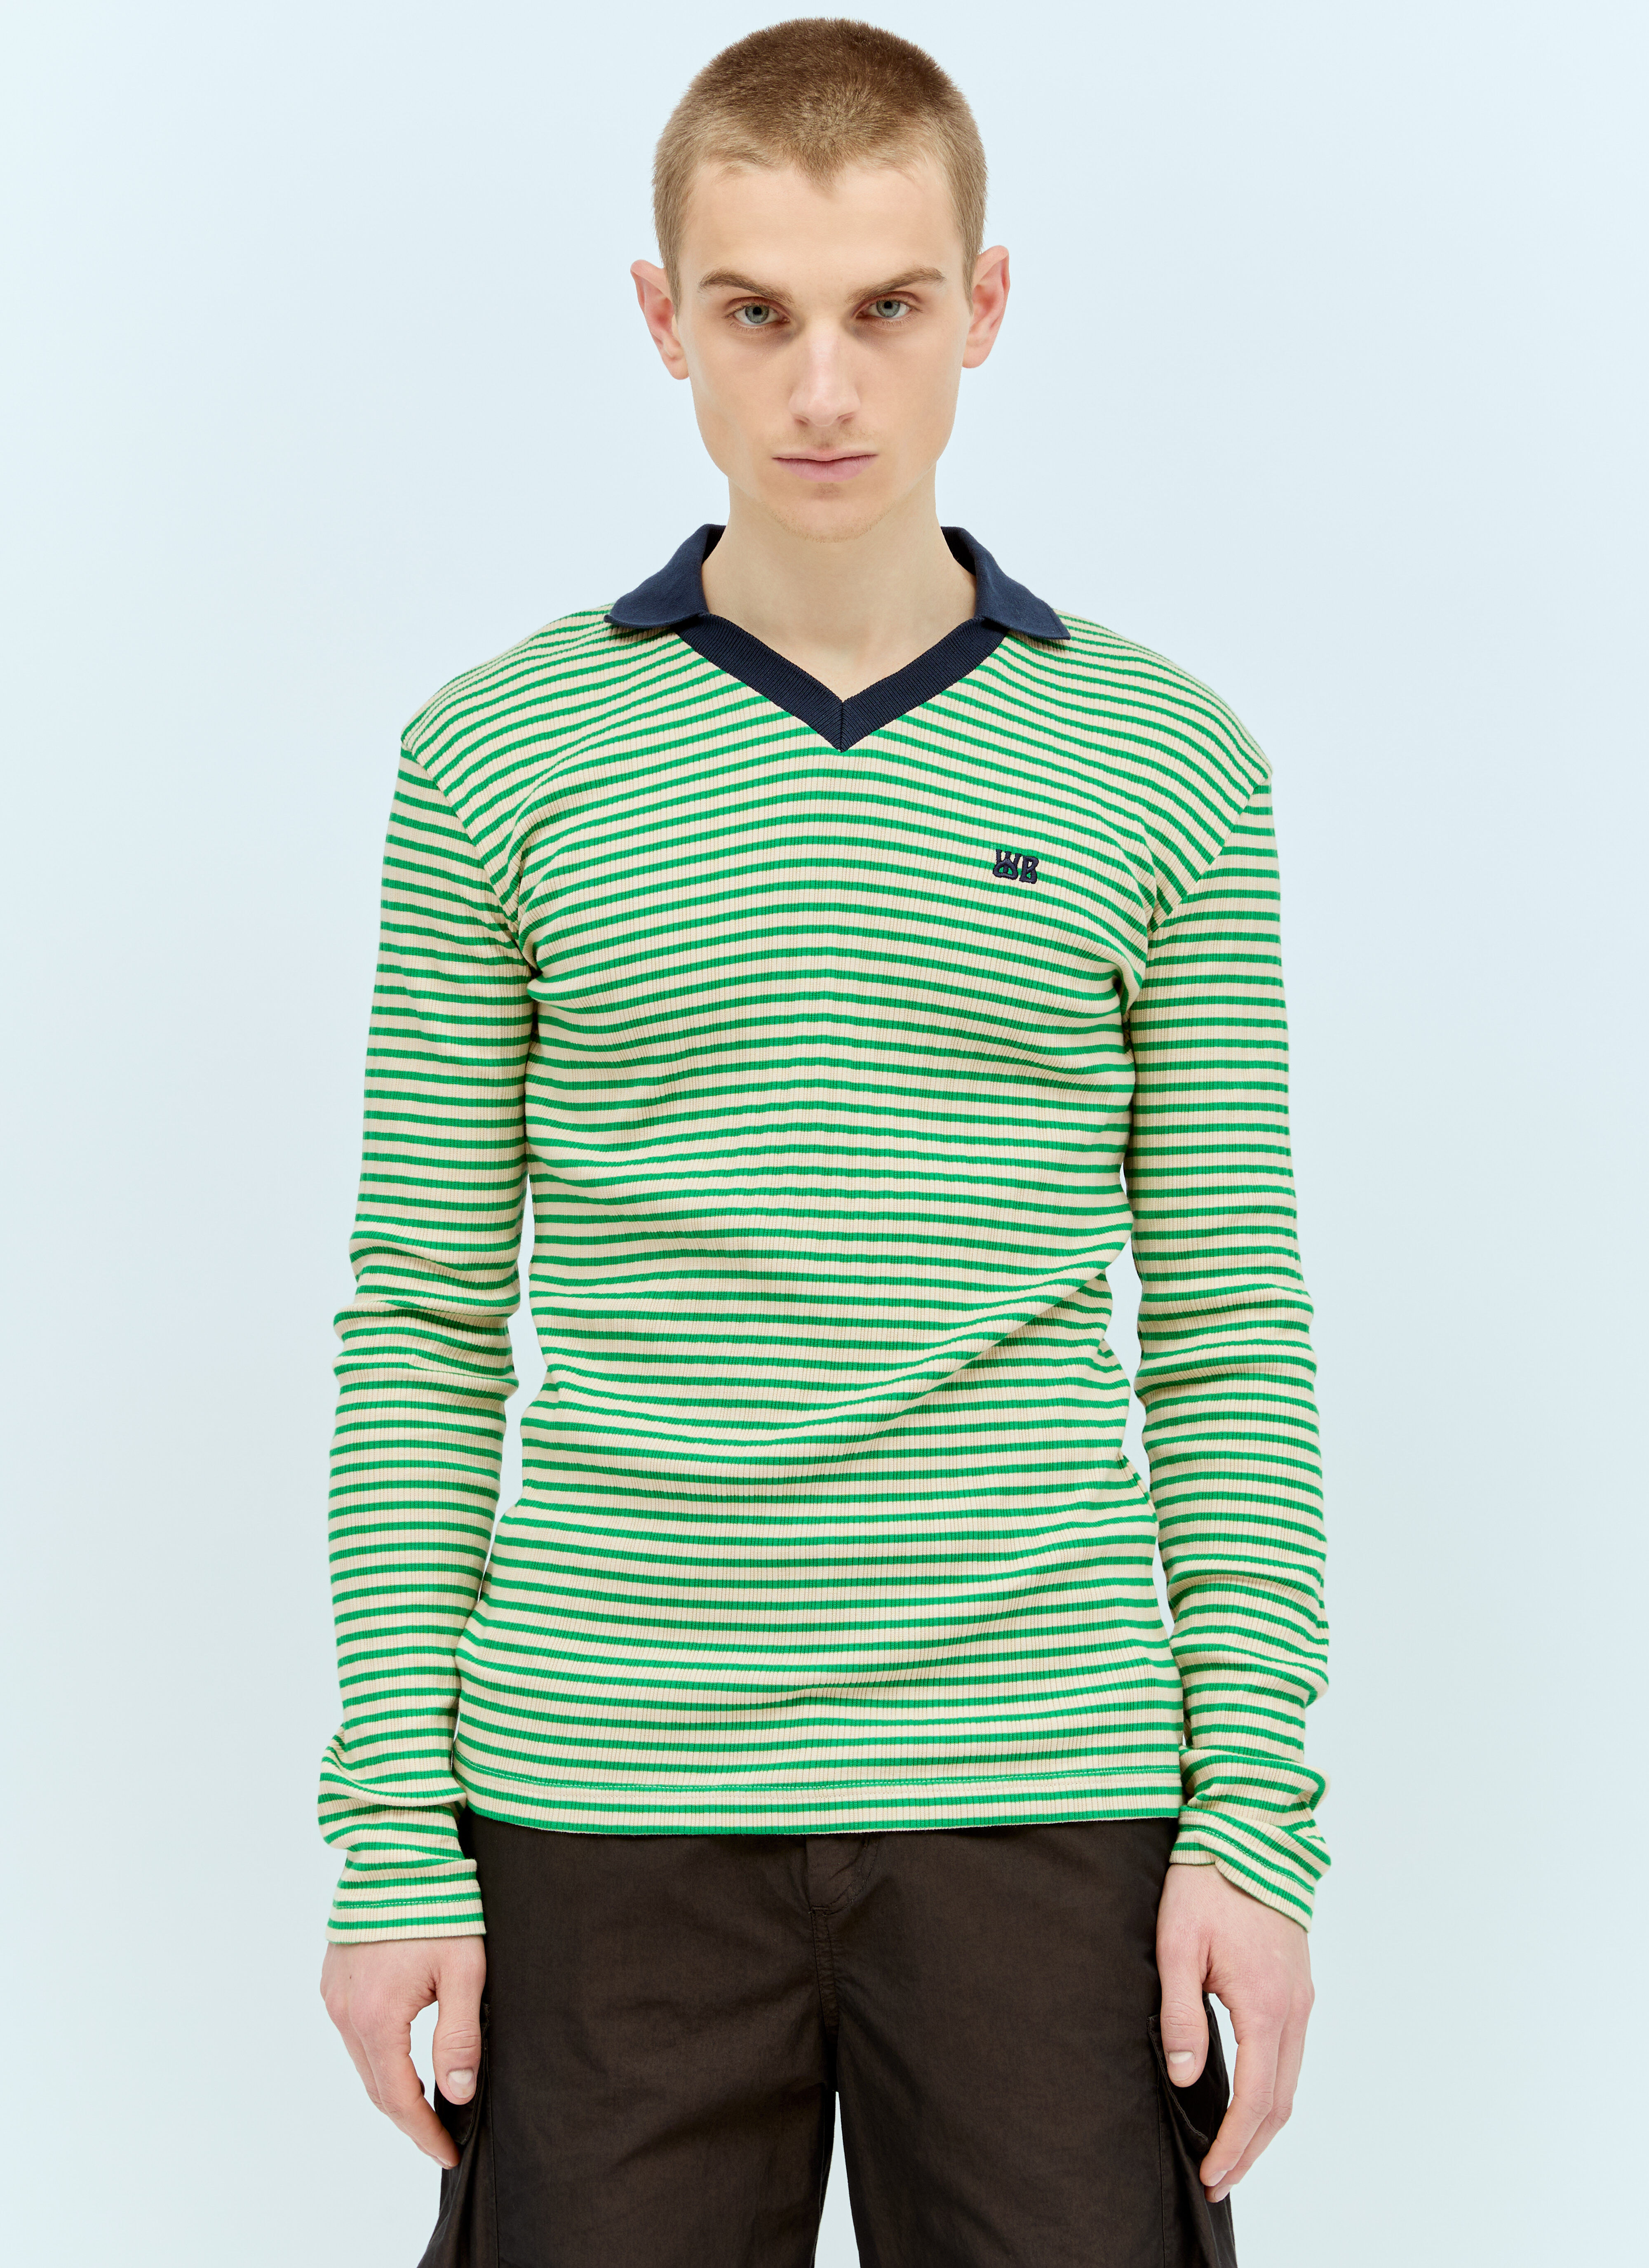 Wales Bonner Sonic Polo Shirt Green wbn0156001